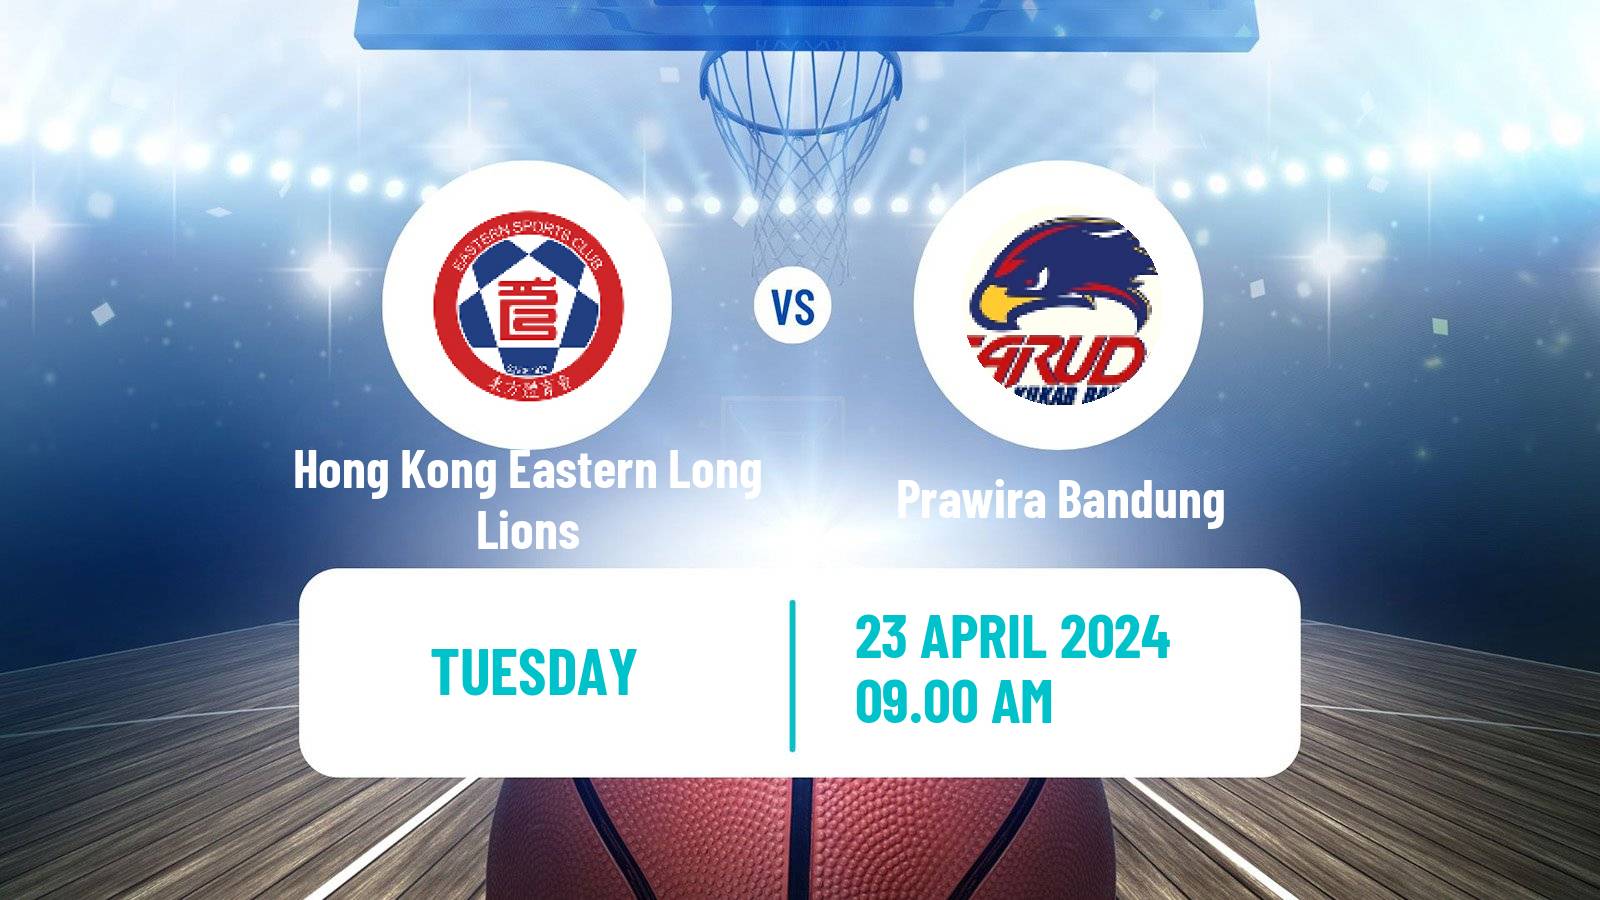 Basketball Asia Champions League Basketball Hong Kong Eastern Long Lions - Prawira Bandung